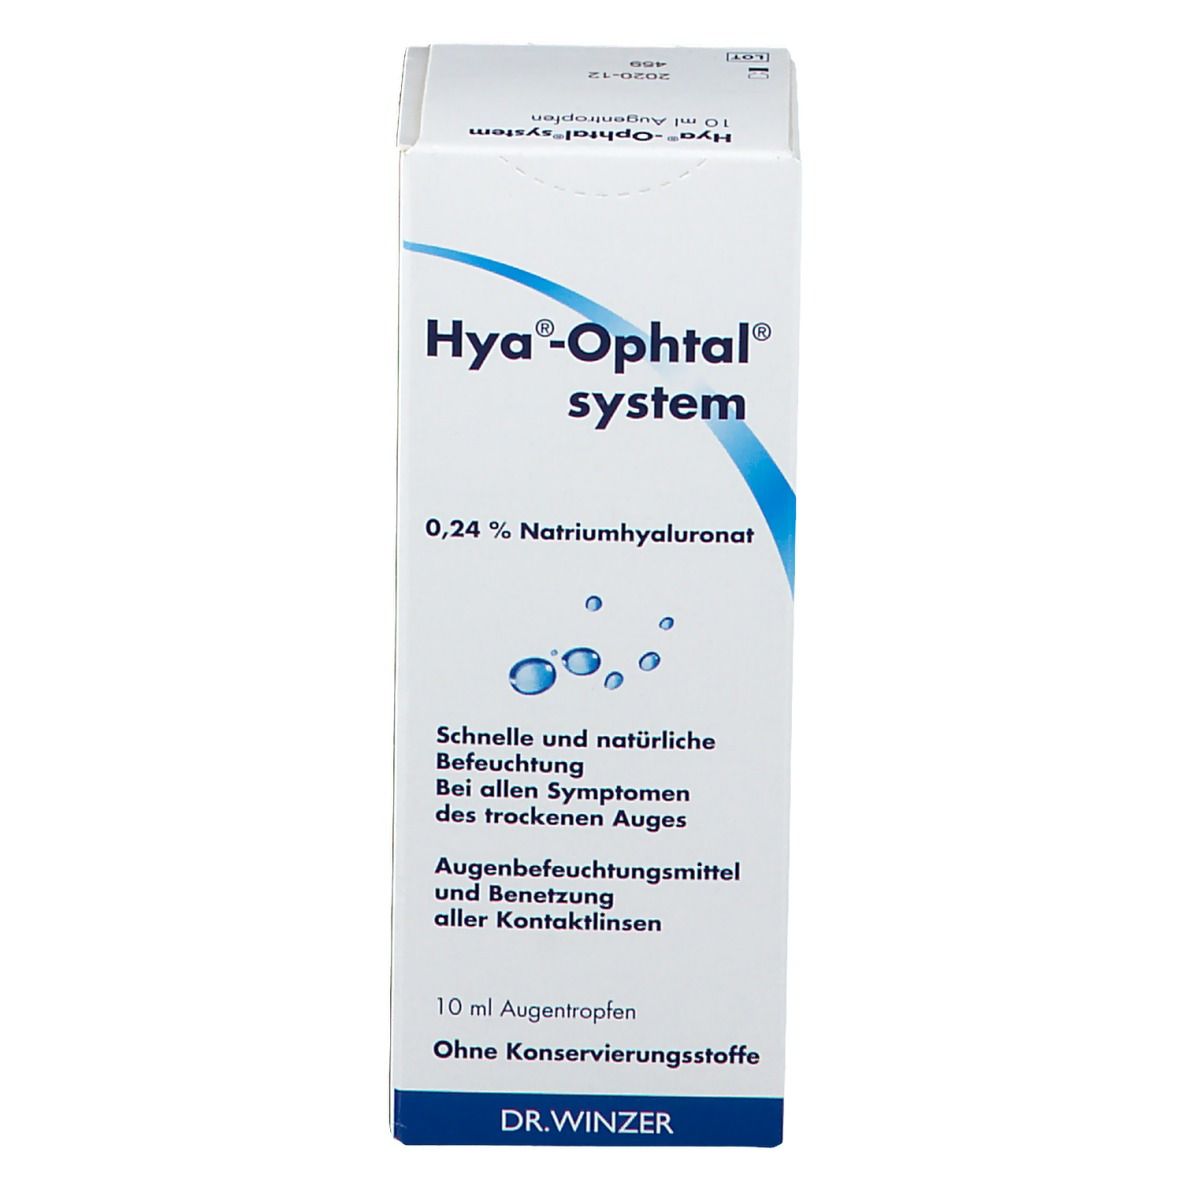 Hya®-Ophtal® system